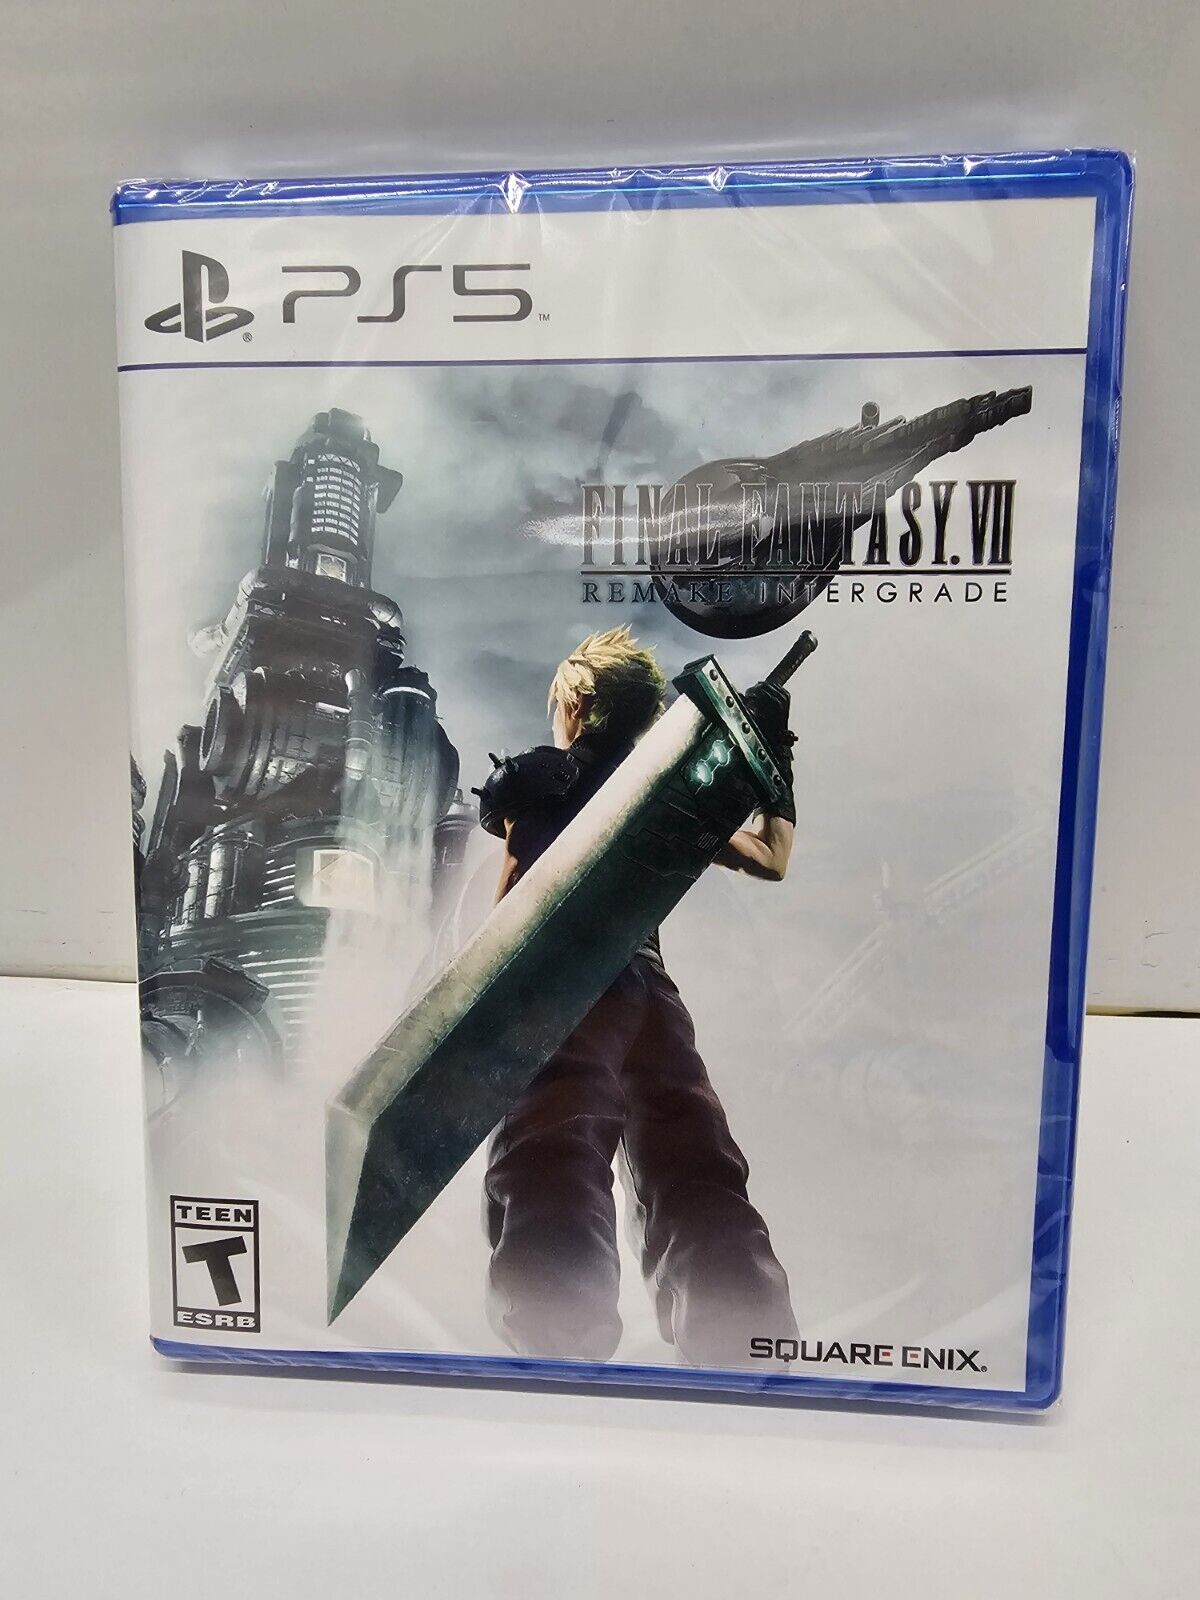 Final Fantasy VII Remake Intergrade PS5 New Factory Sealed Game FF 7 Yuffie